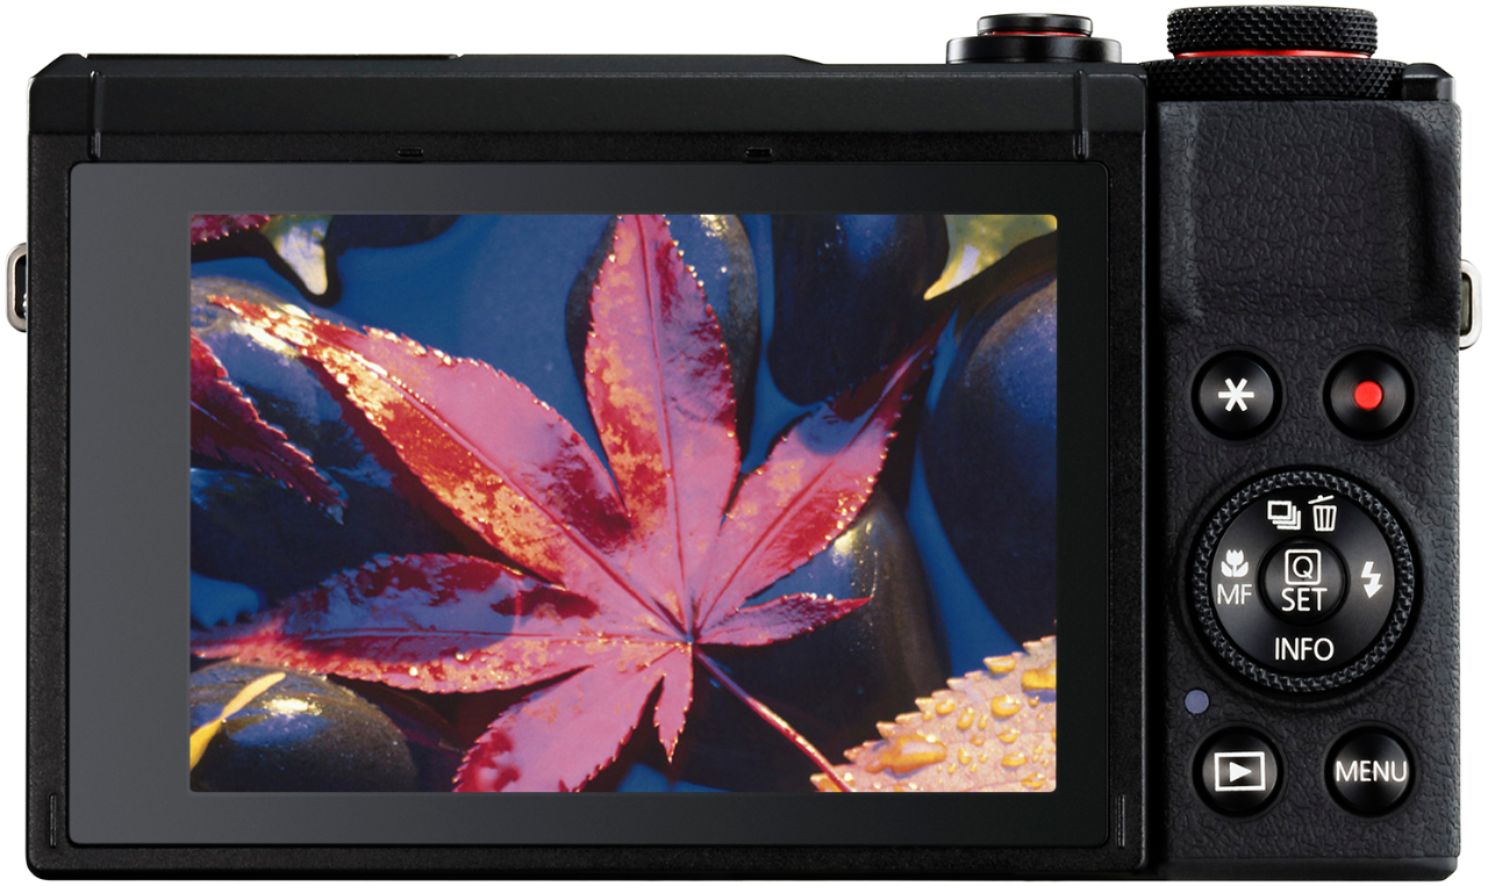 Canon PowerShot G7 X Mark III 20.1-Megapixel Digital Camera Black 3637C001  - Best Buy